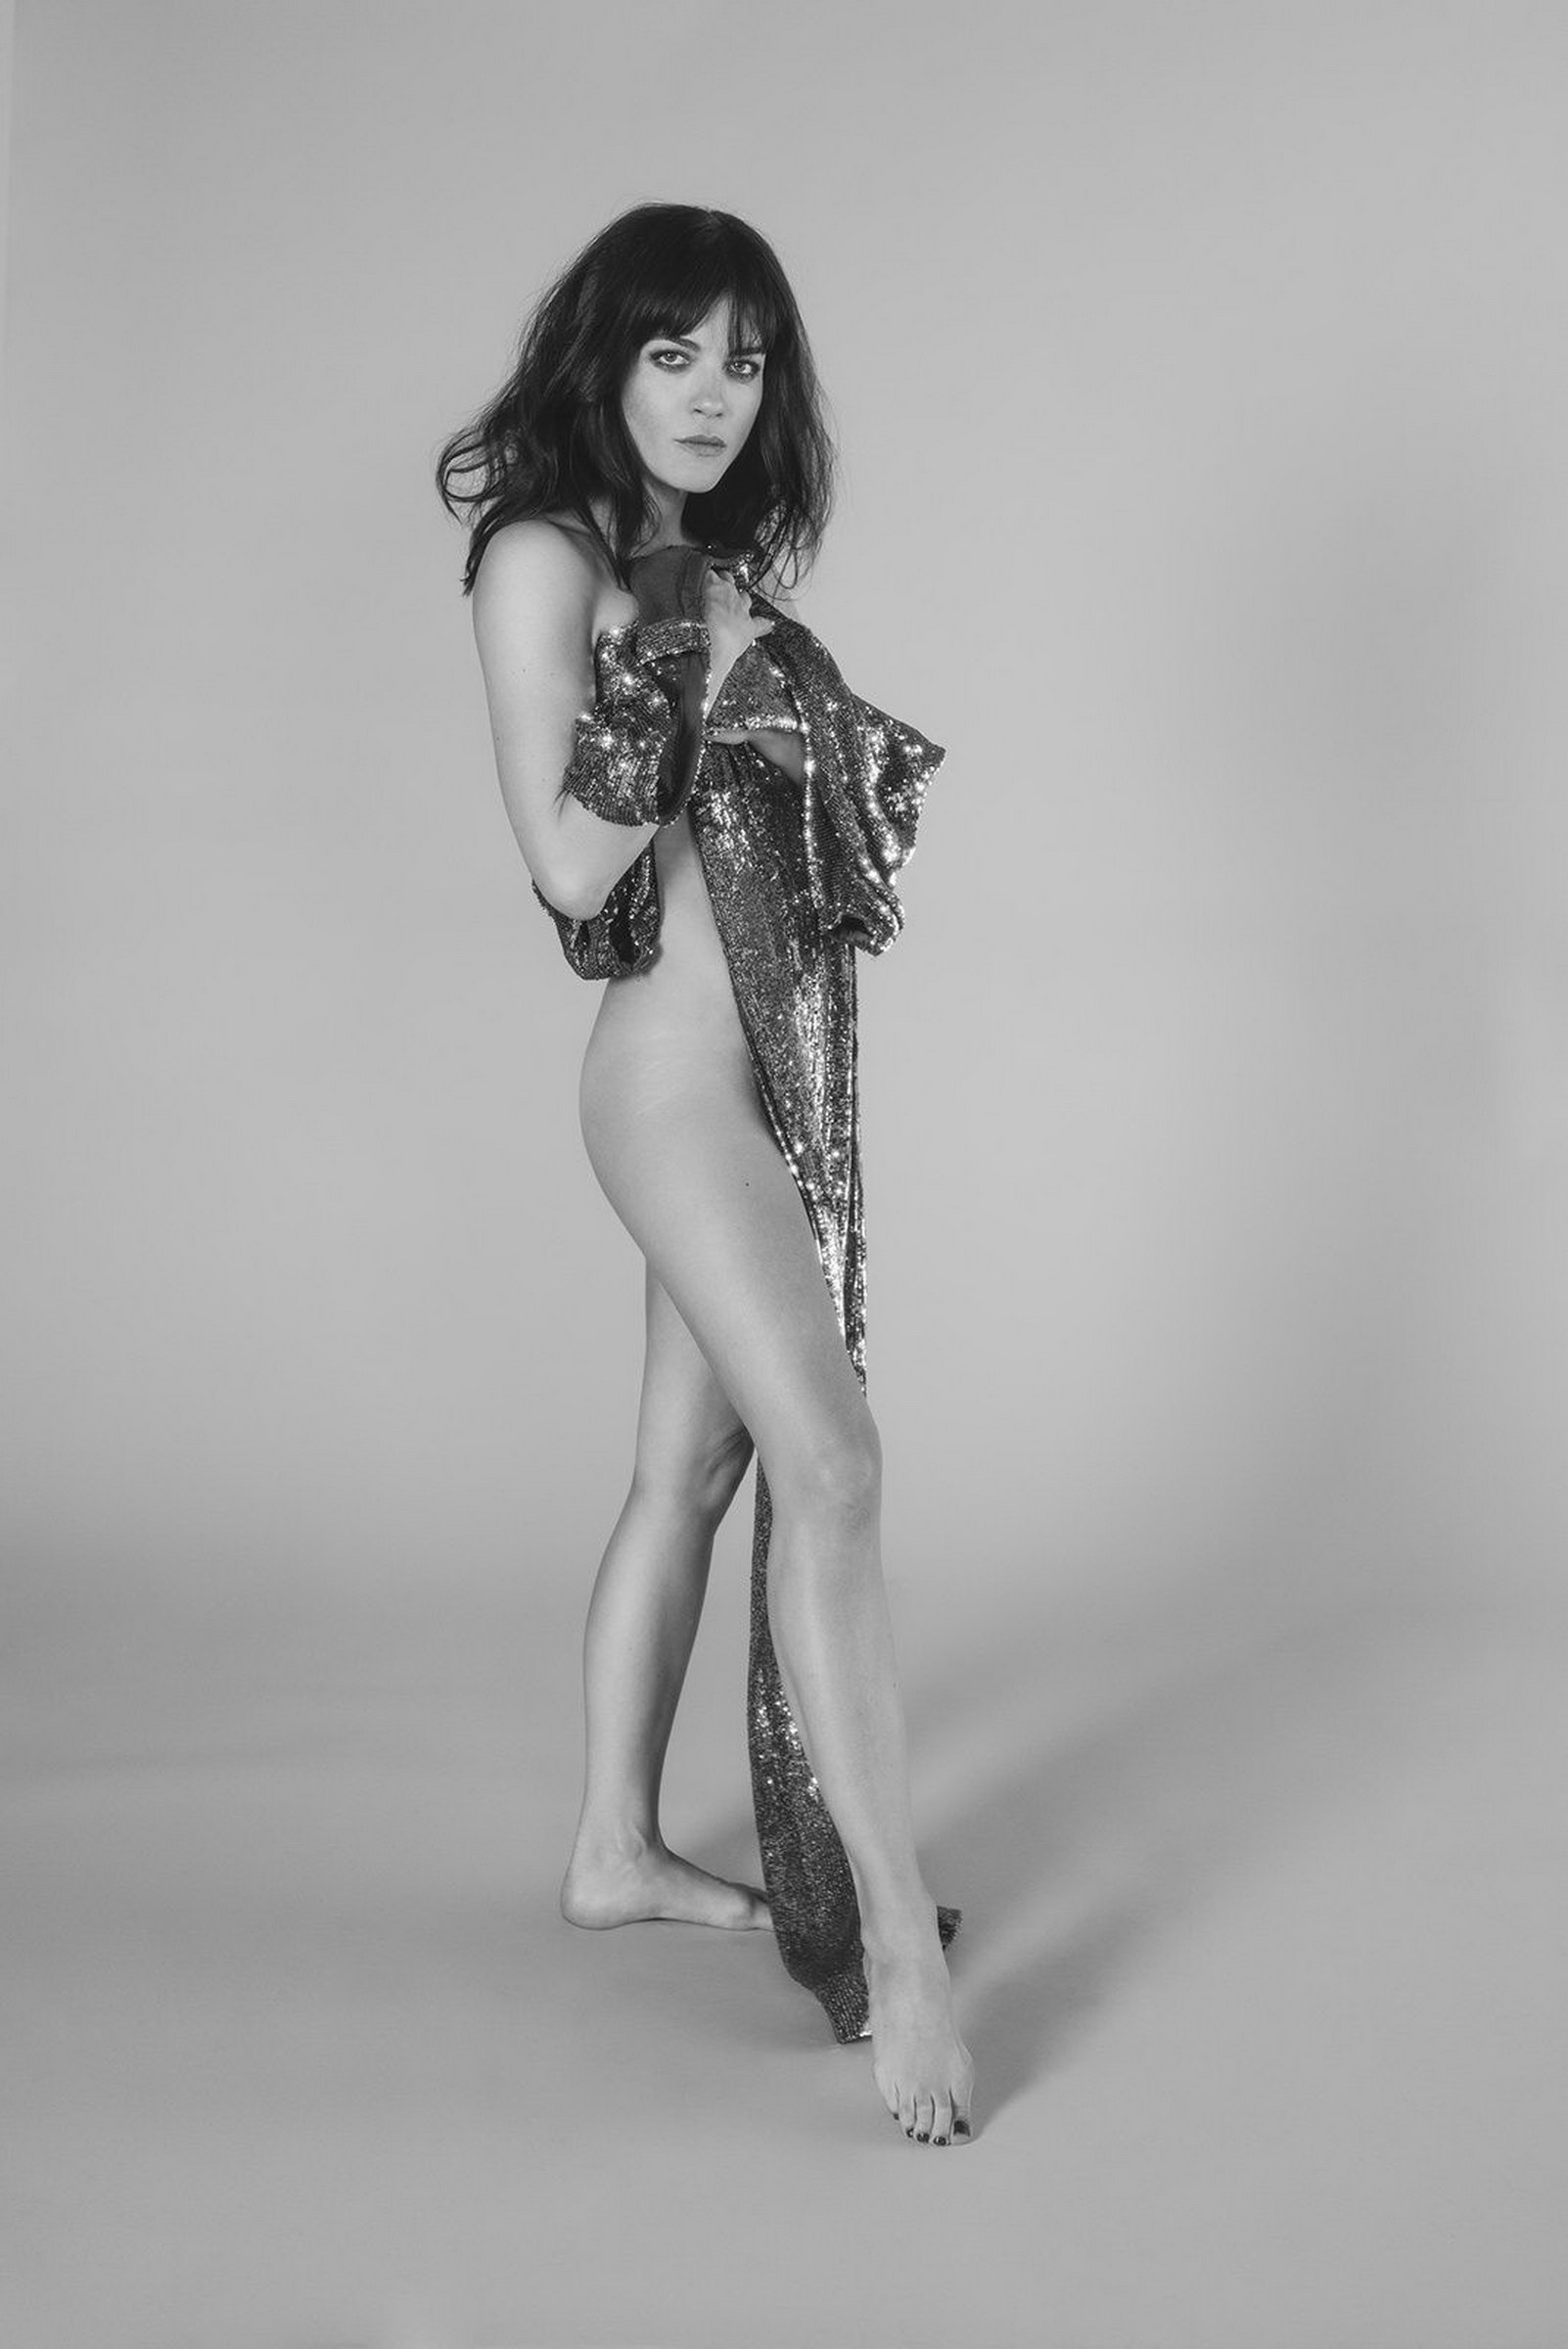 Selma Blair nude braless pokies in see through top for NO TOFU magazine 3x HQ photos 5.jpg